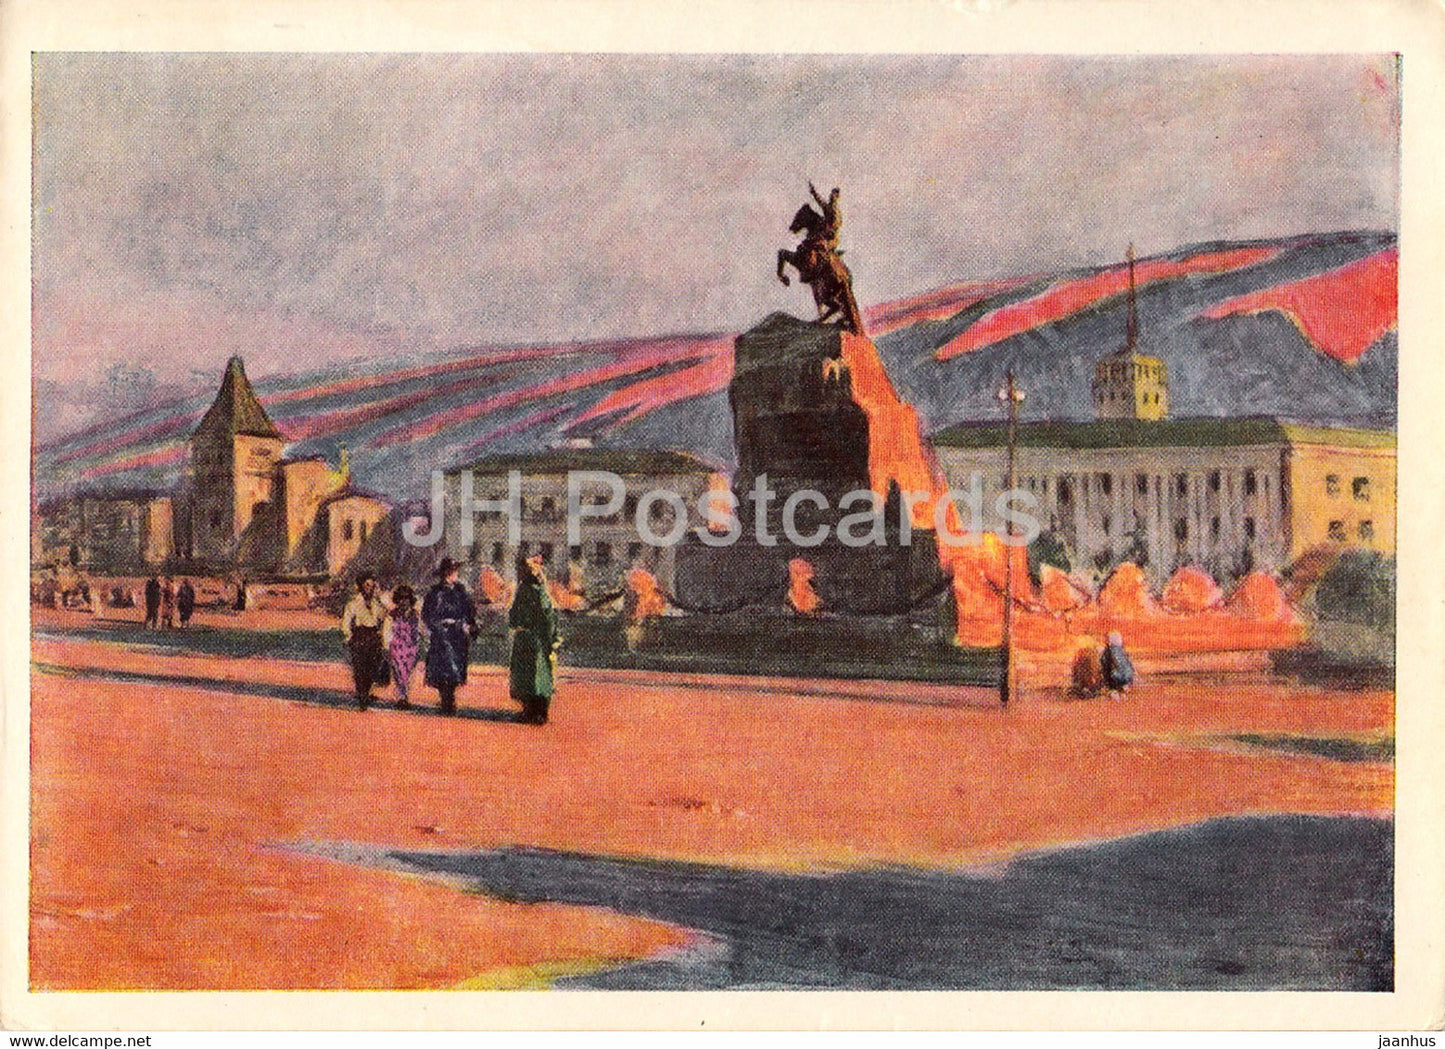 painting by A. Stroganov - Ulan Ude - Sukhe Batora square - Mongolian art - 1966 - Russia USSR - unused - JH Postcards